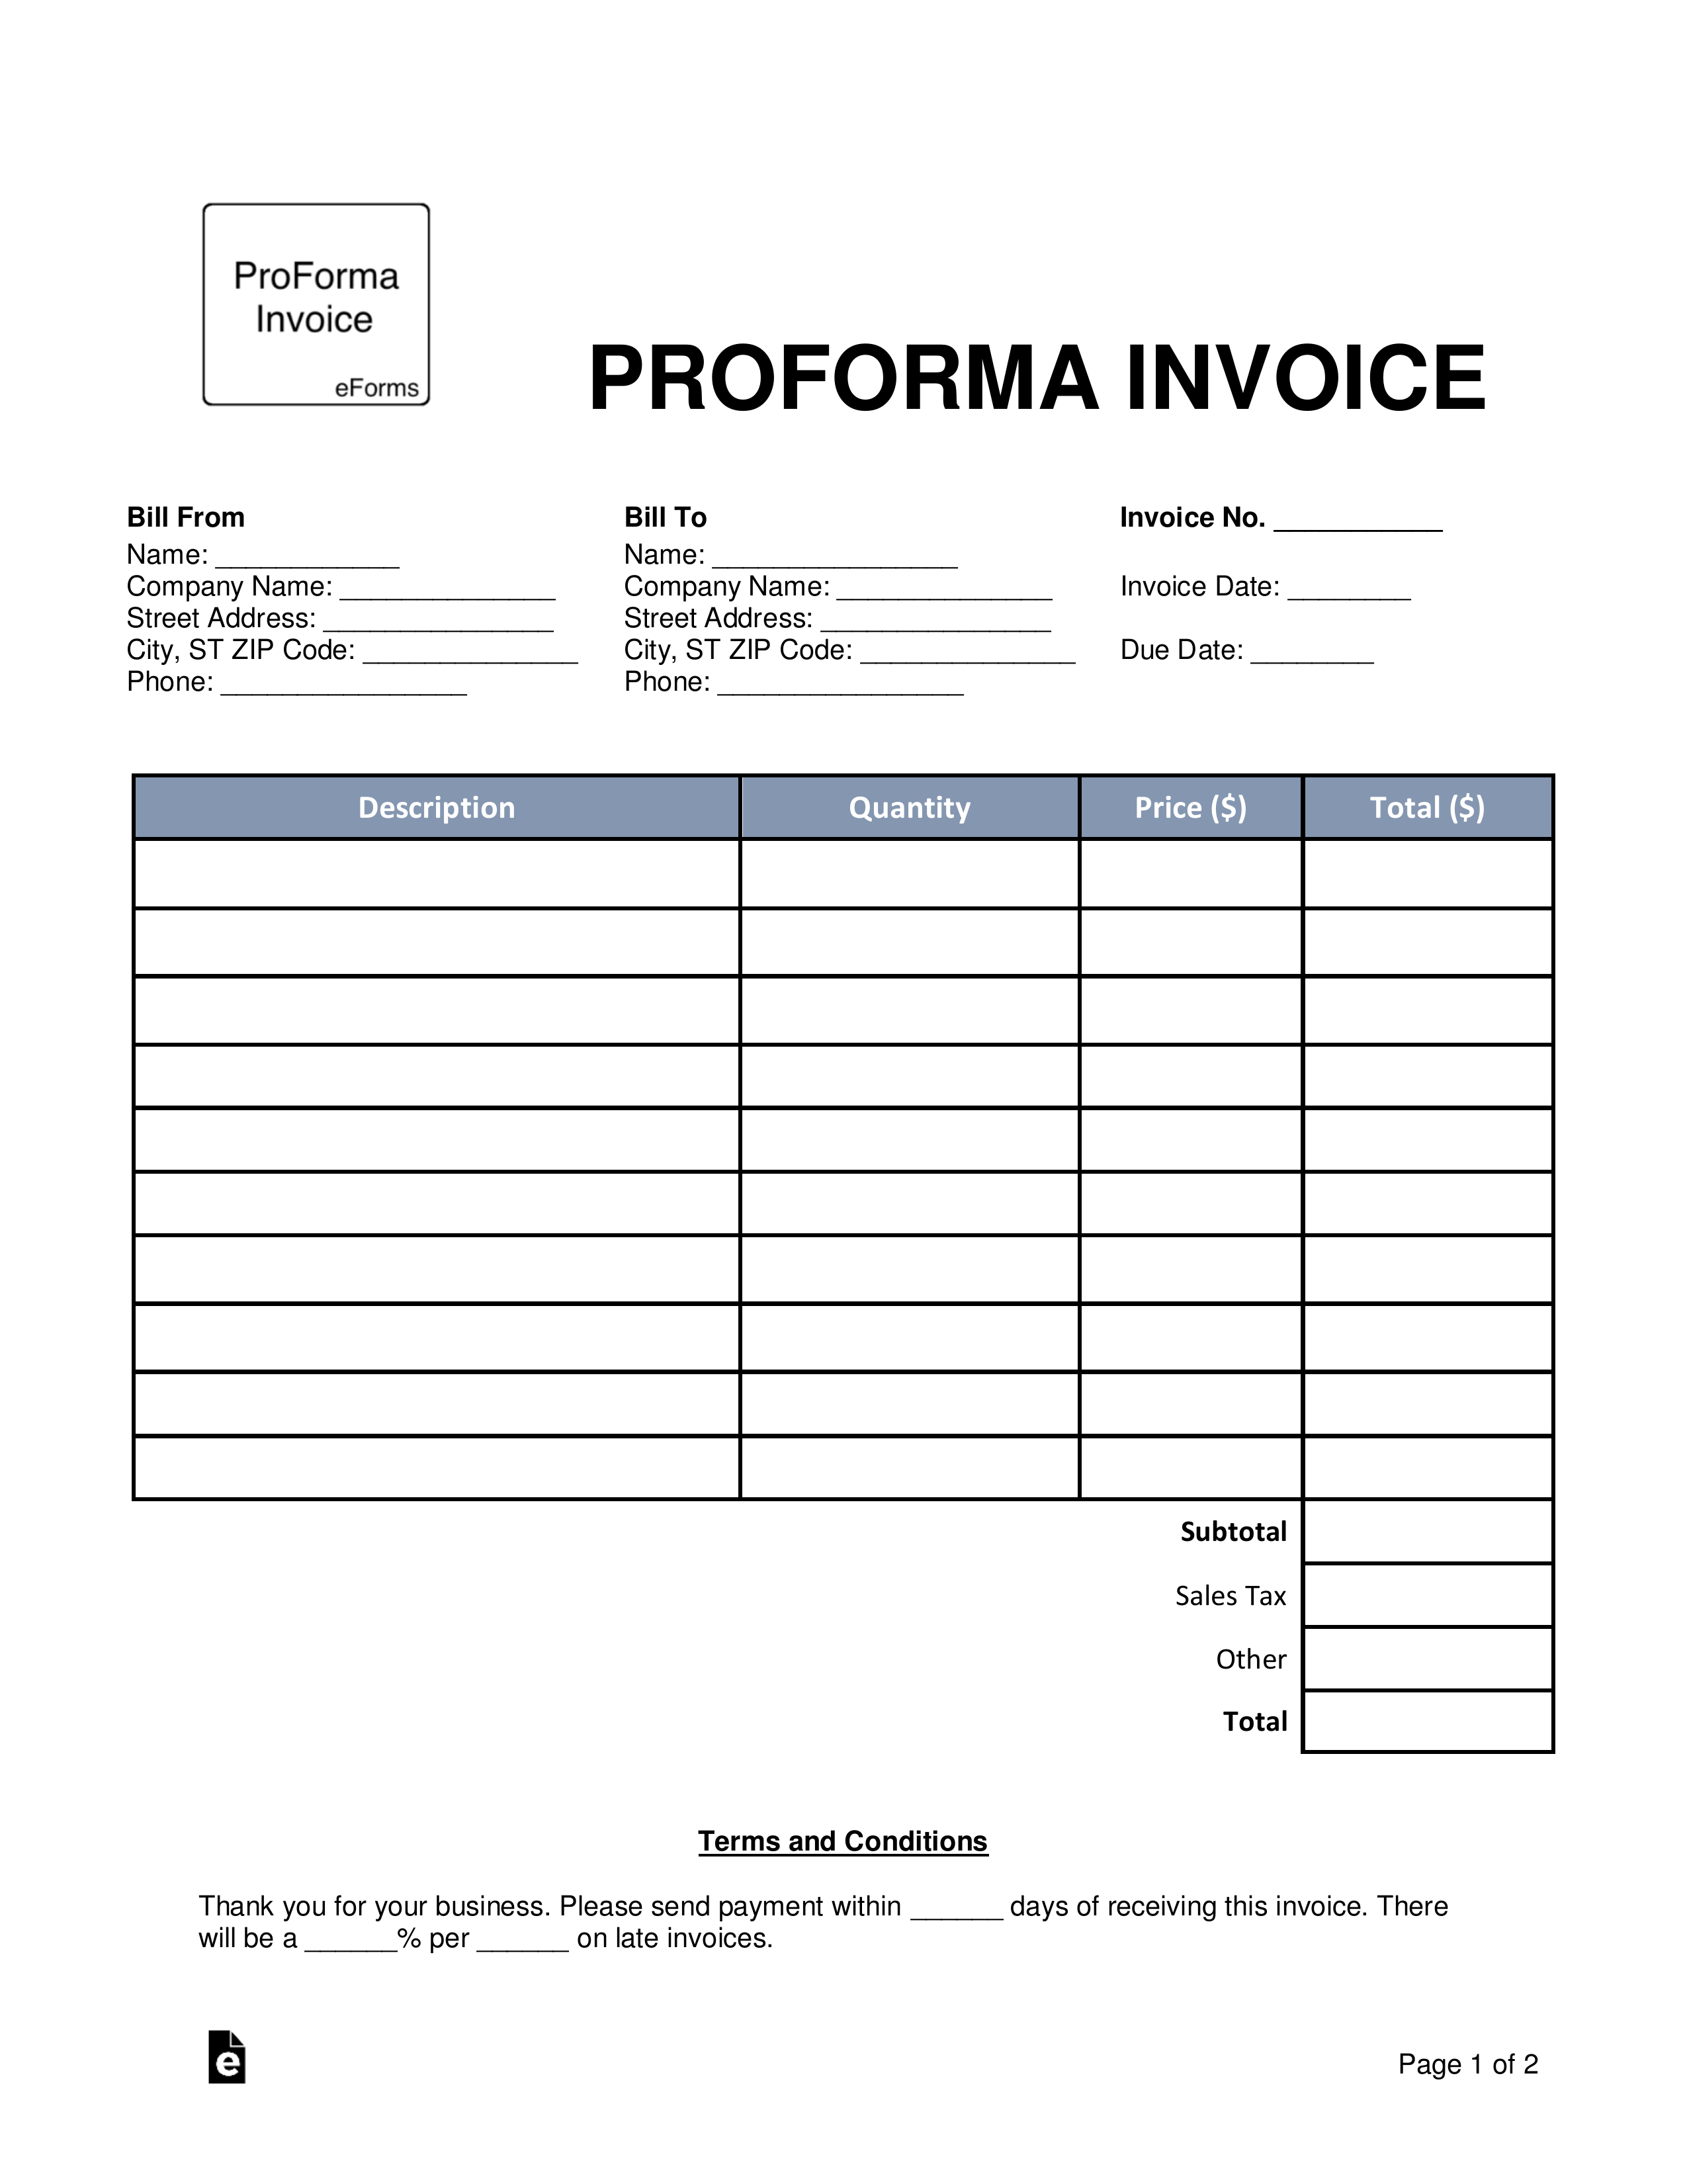 Free Proforma Invoice Template - Word | Pdf | Eforms – Free Intended For Free Proforma Invoice Template Word